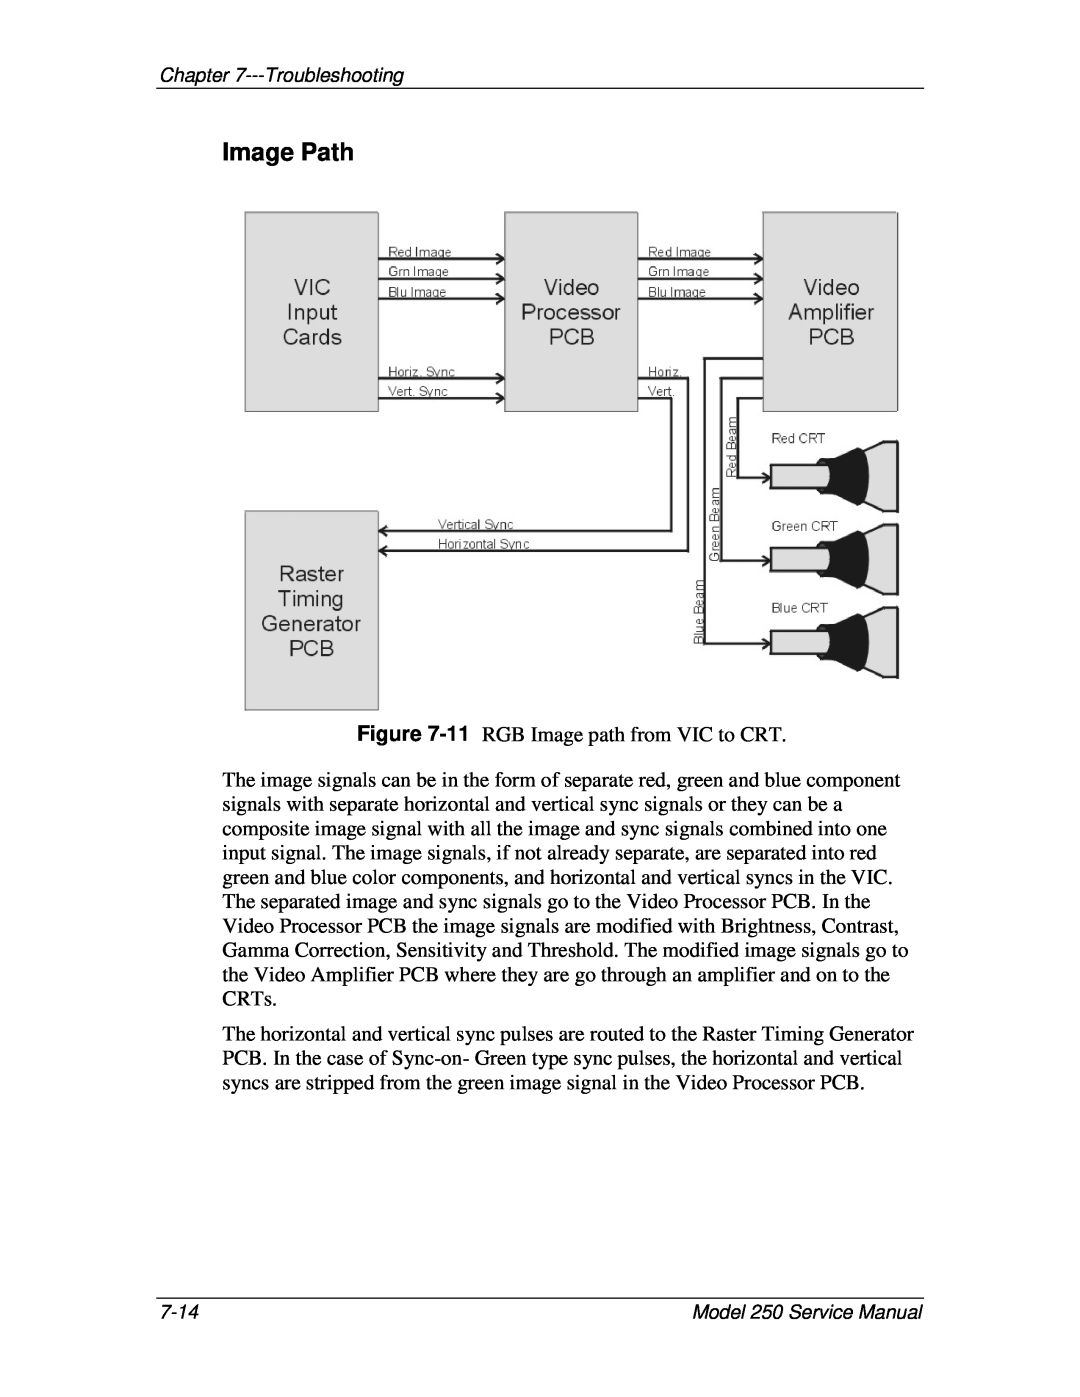 JVC 250 service manual Image Path 